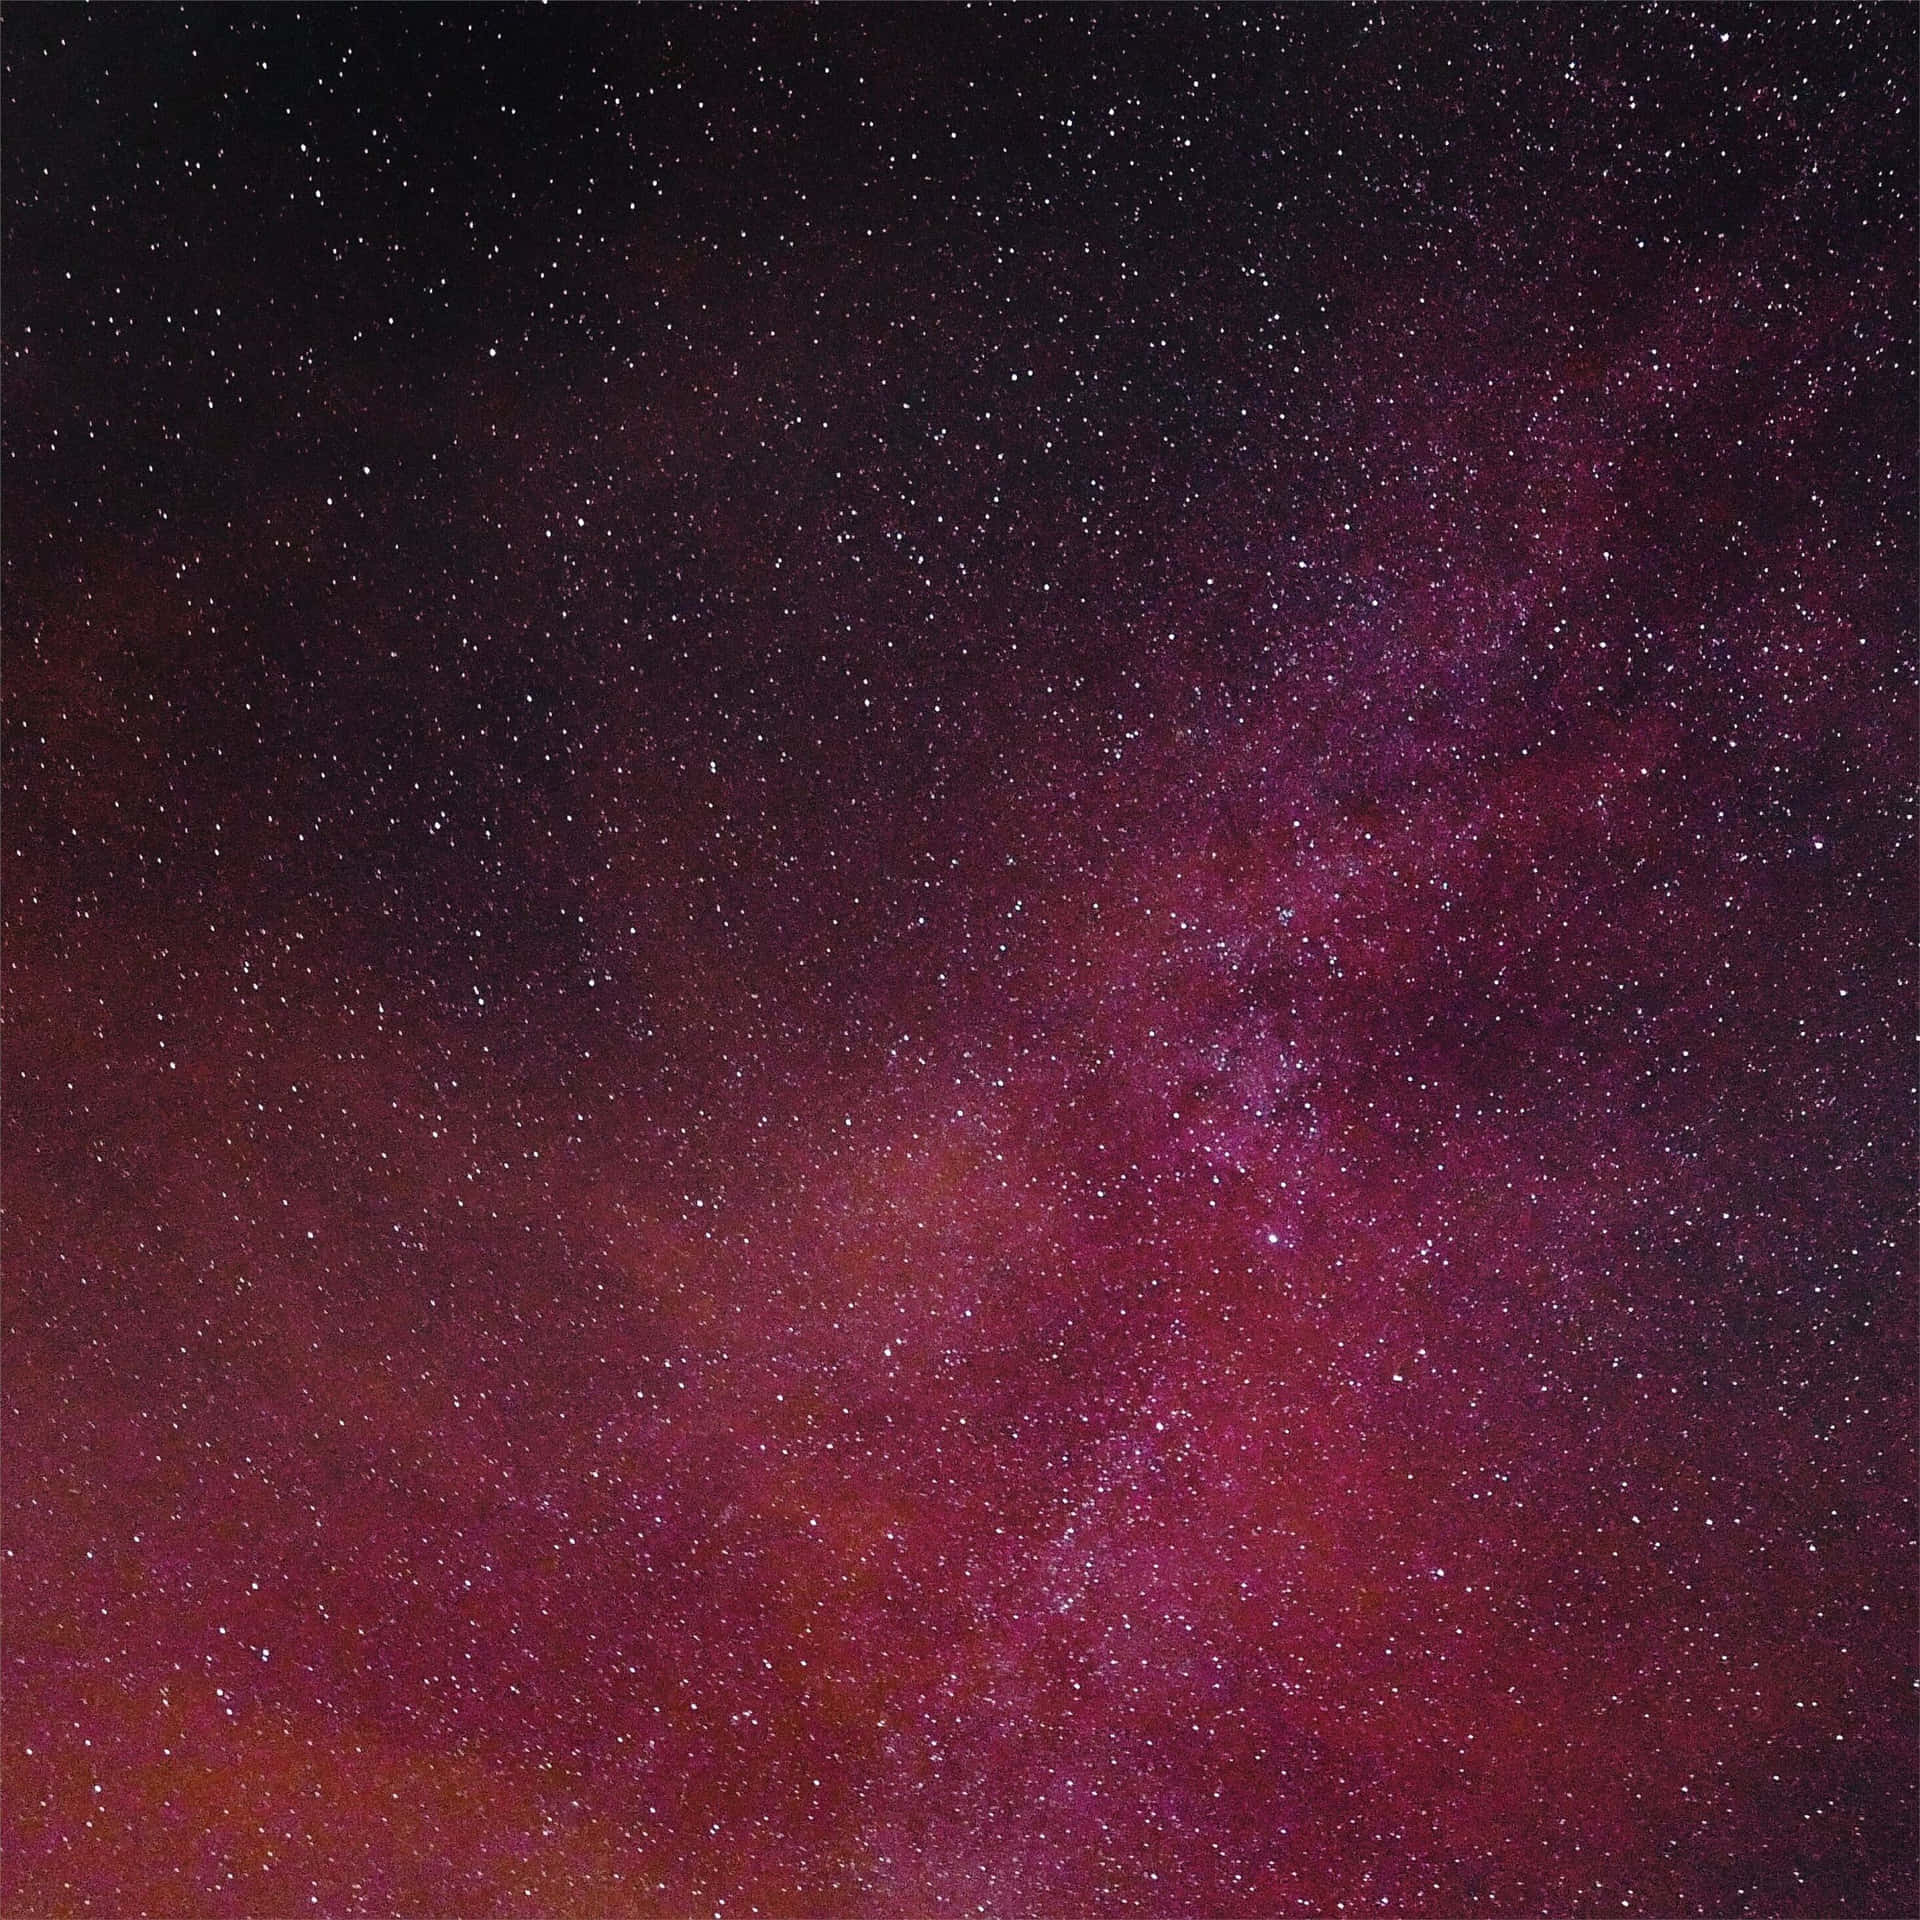 Dazzling Pink Stars Illuminating The Galaxy Background